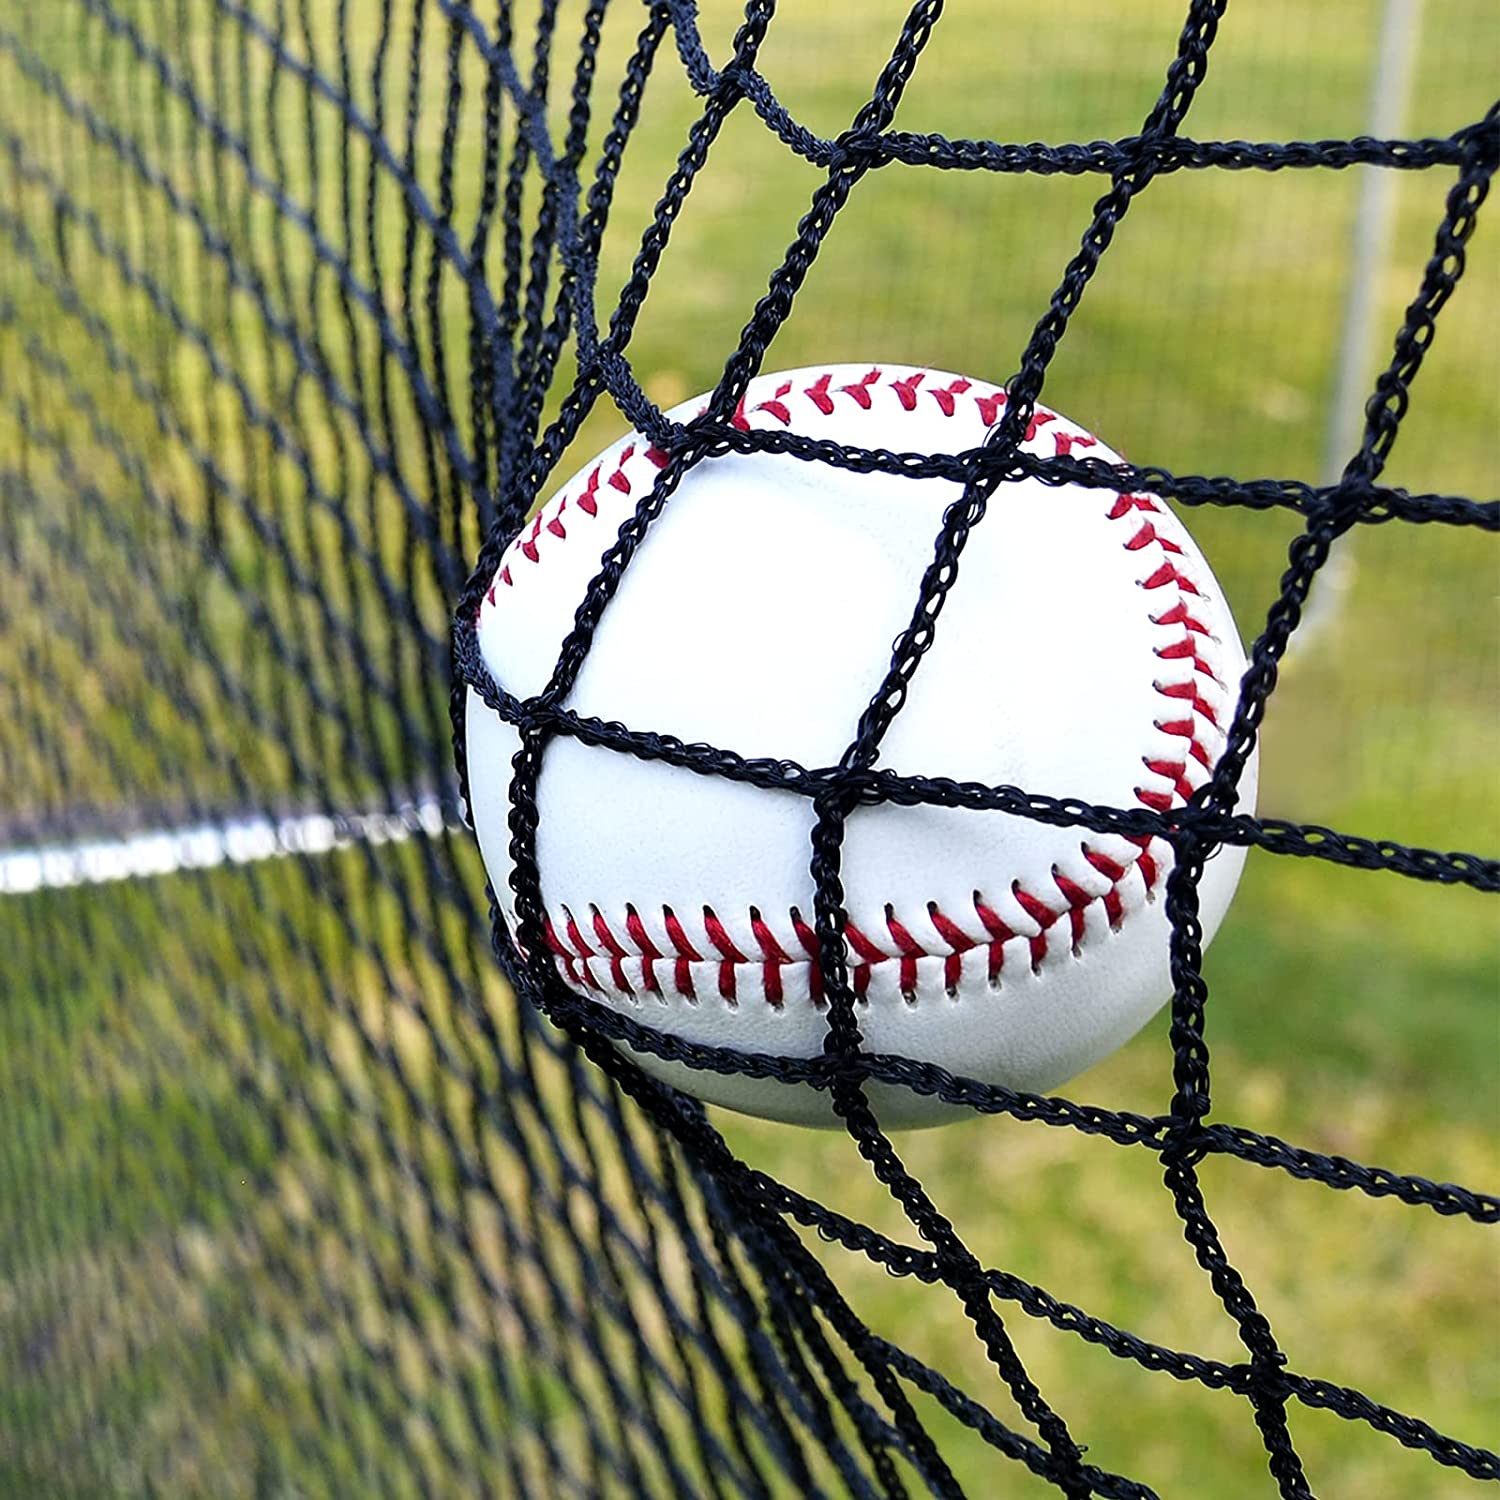 Gagalileo 44x12x10FT Baseball Batting Cage Net, Portable Baseball Replacement Net, Outdoors Batting Net,Replacement Netting,Baseball Practice Batting Net